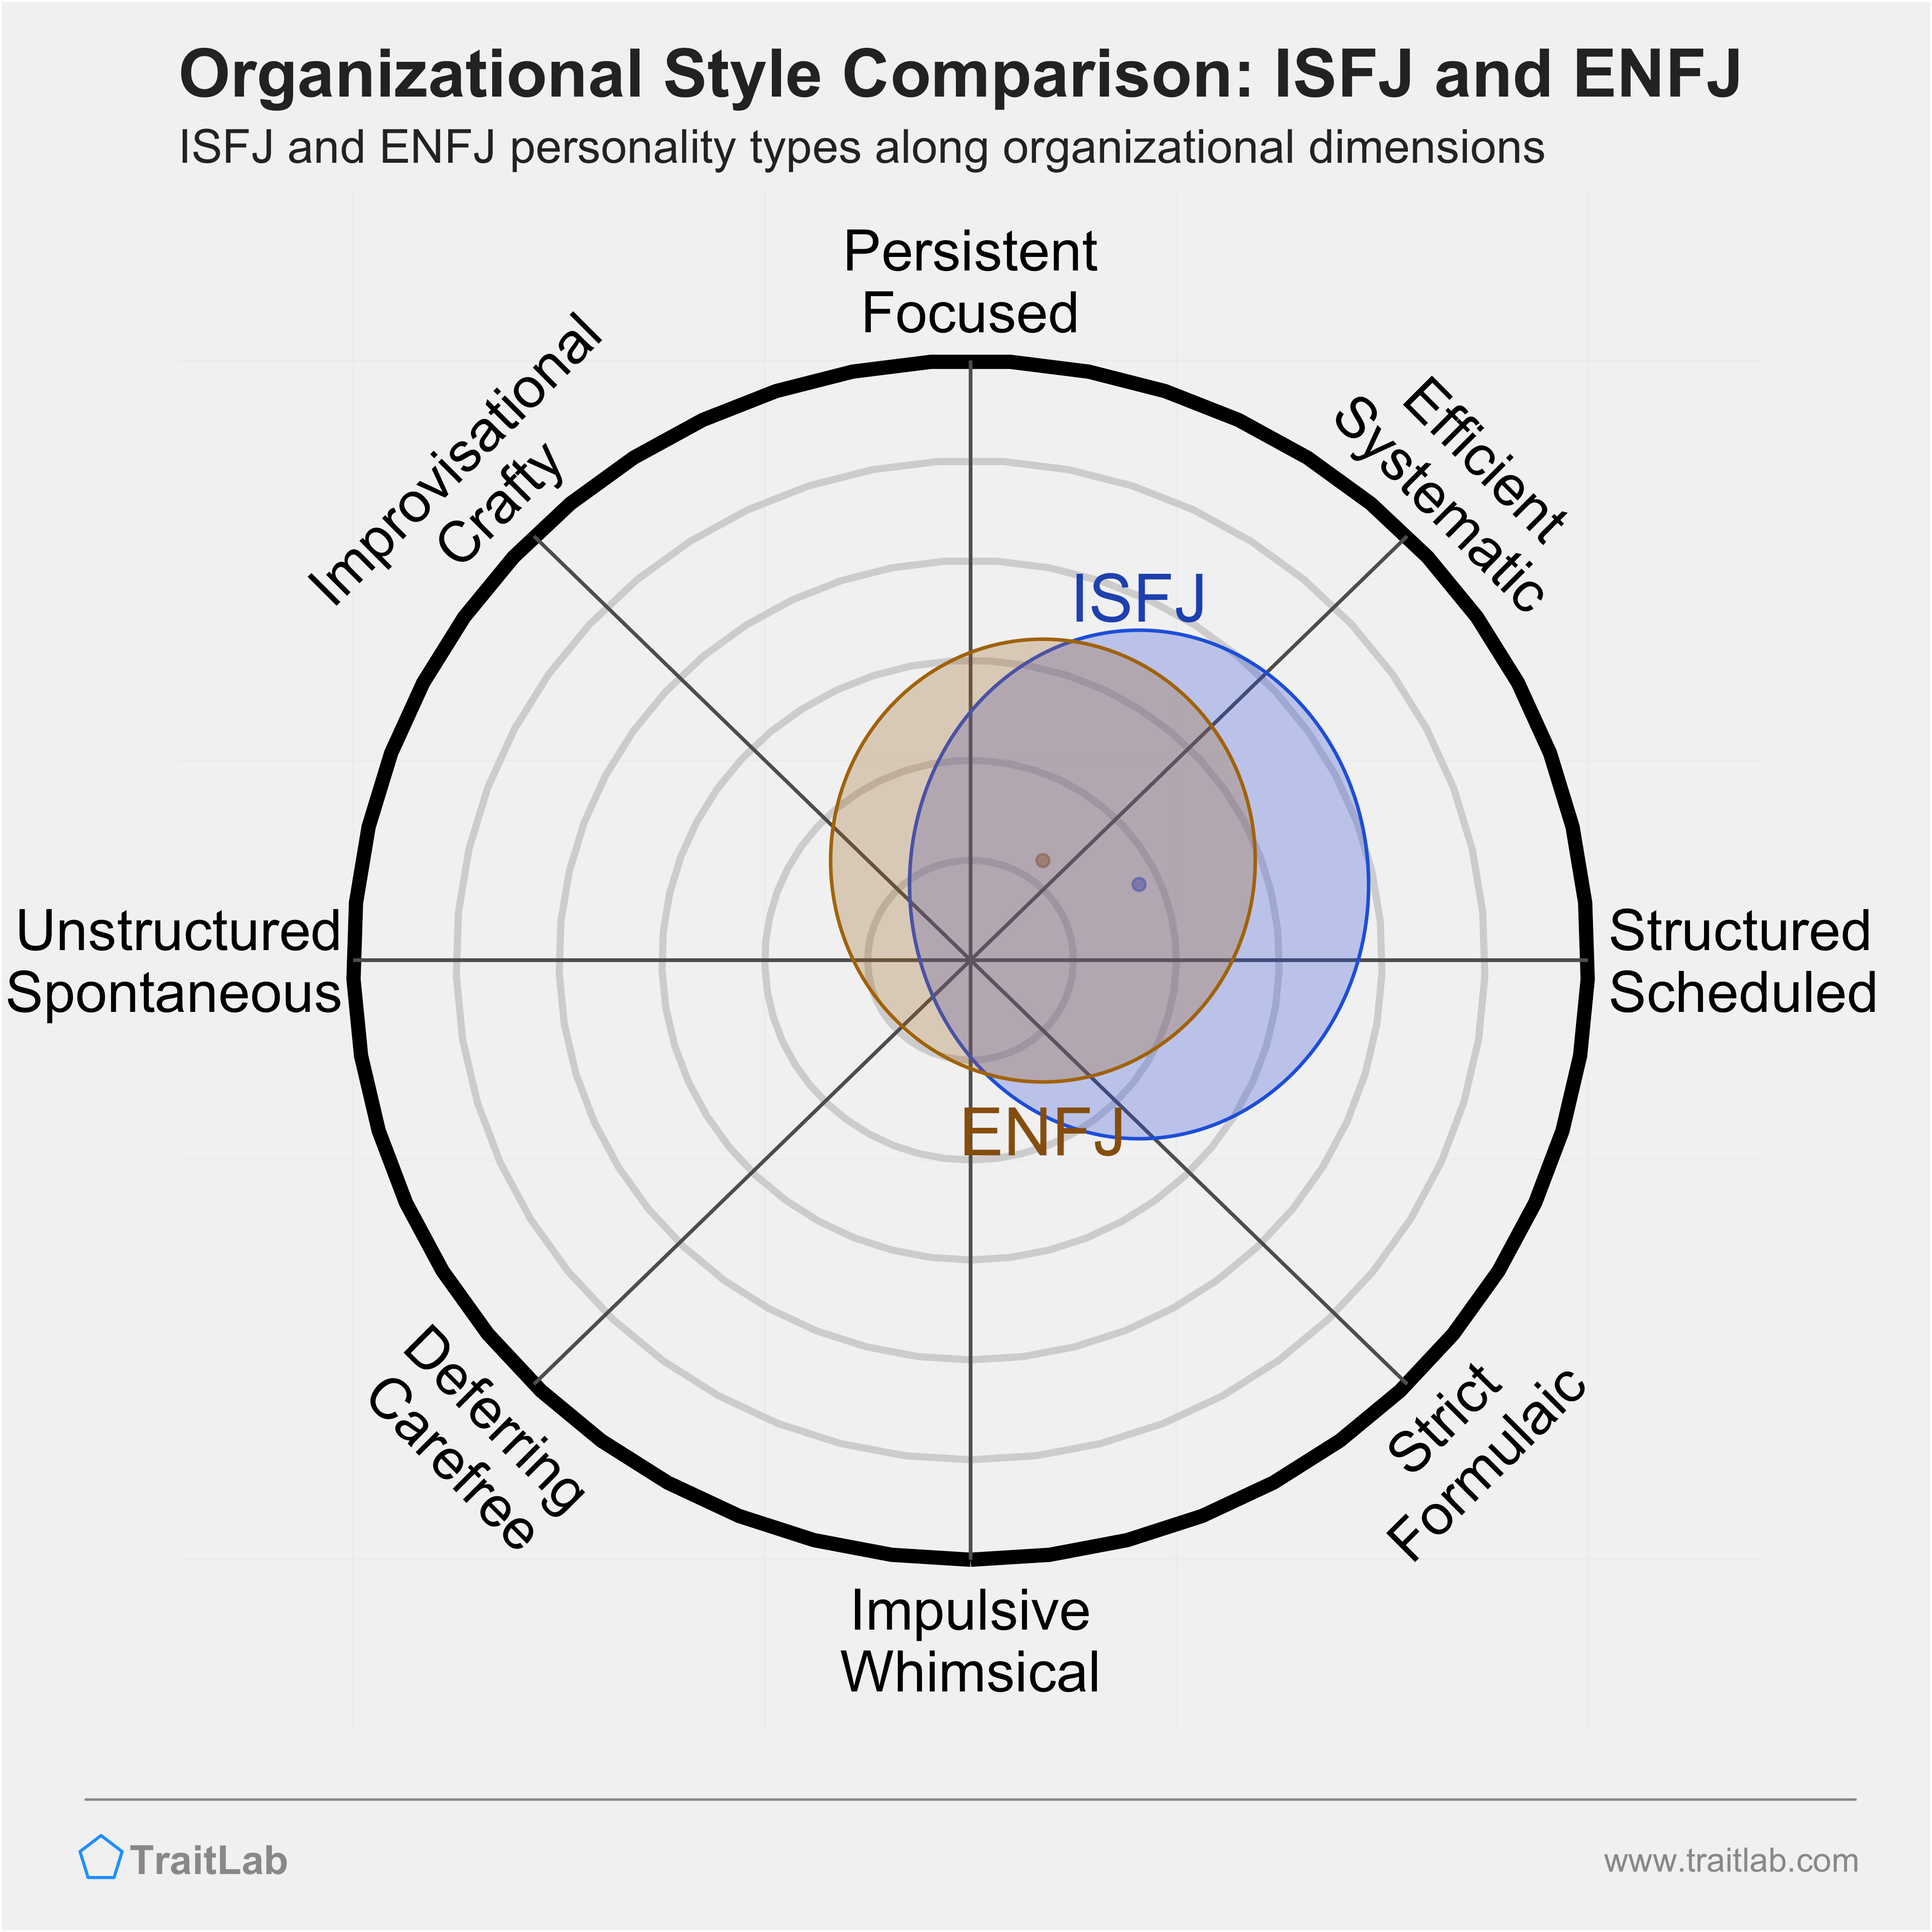 ISFJ and ENFJ comparison across organizational dimensions